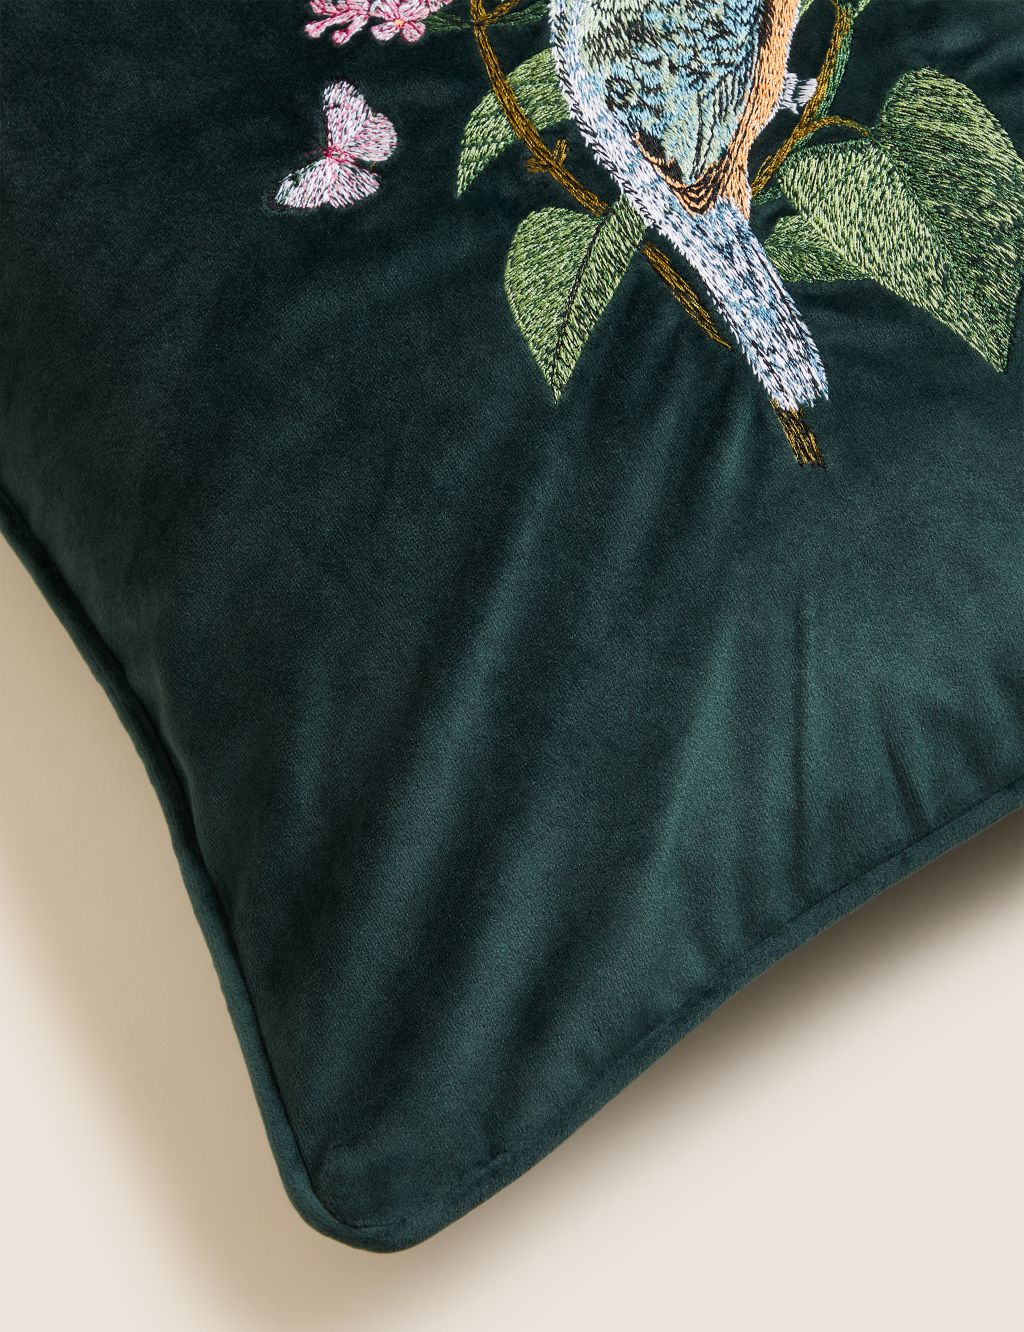 Velvet Floral Bird Embroidered Cushion image 3